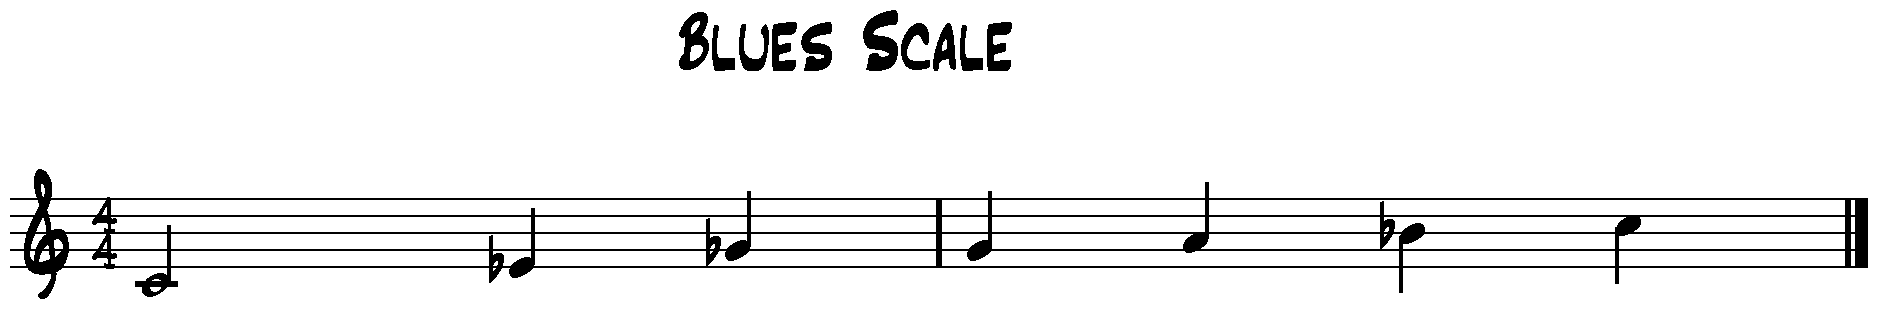 Blues Music Scales Chart for Jazz Improvisation